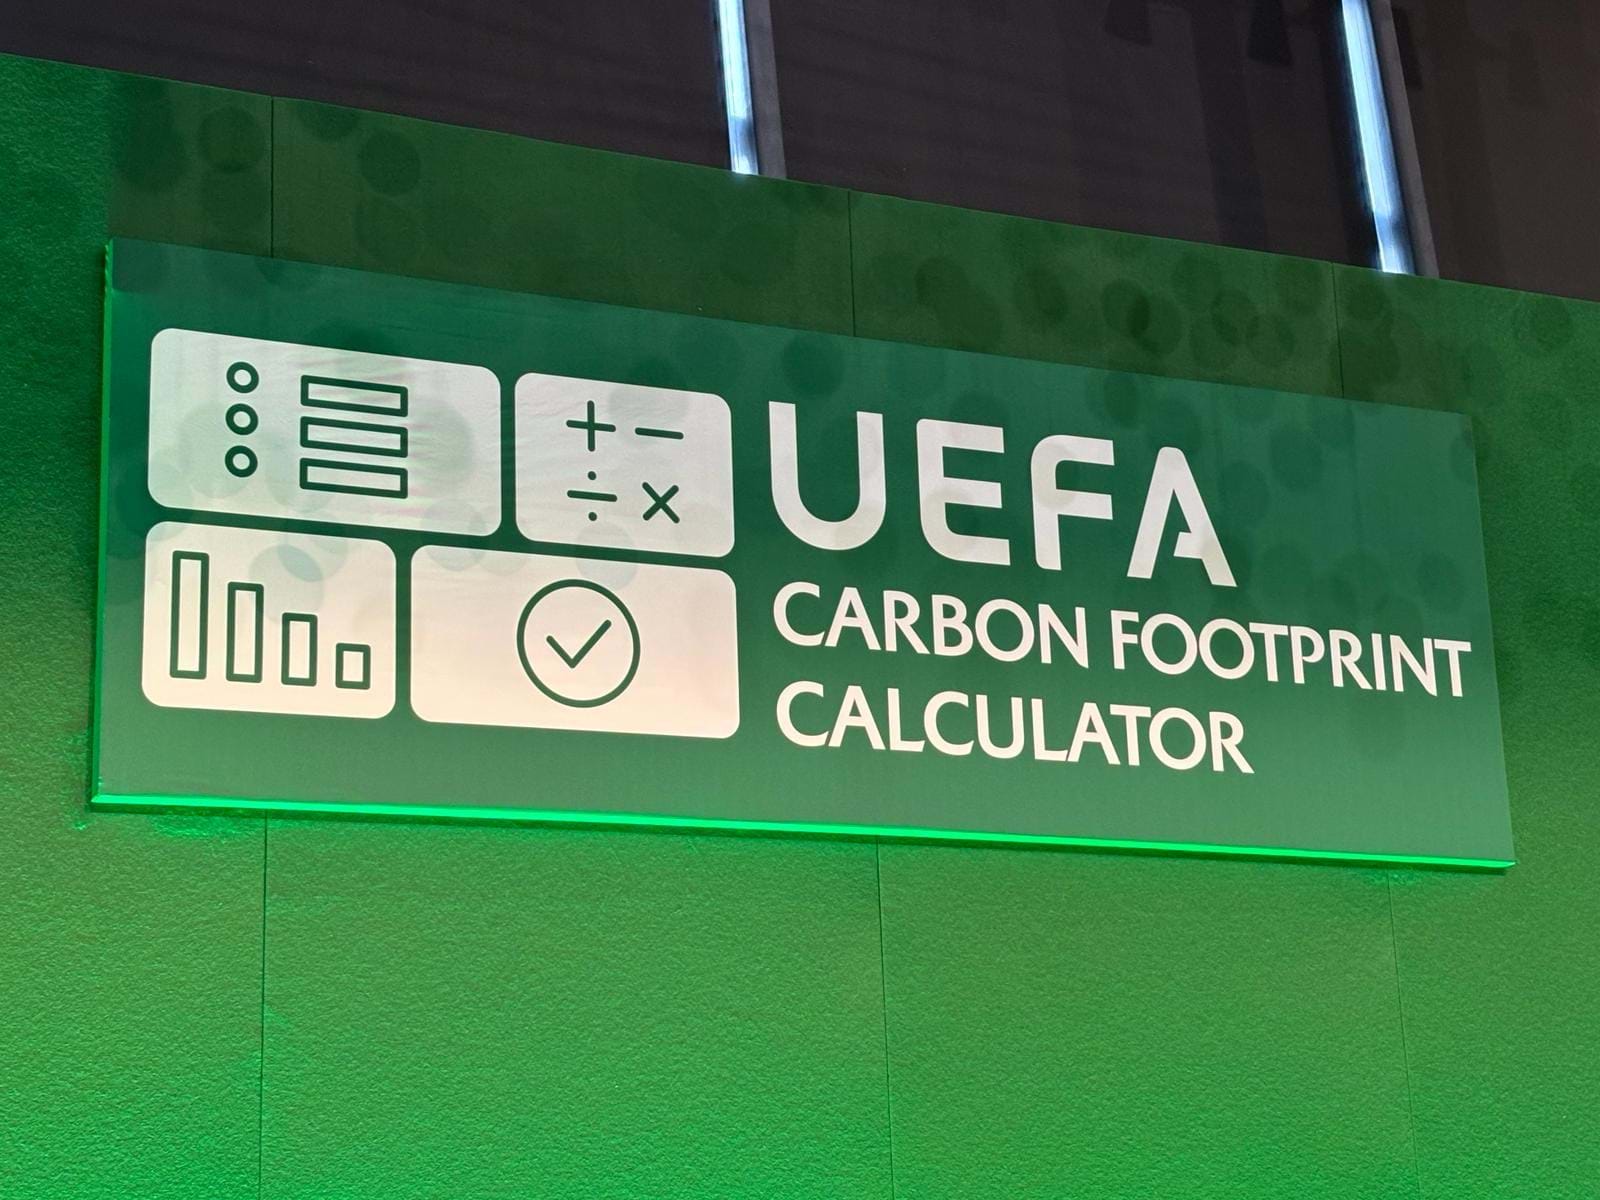 UEFA's Carbon Footprint Calculator presented